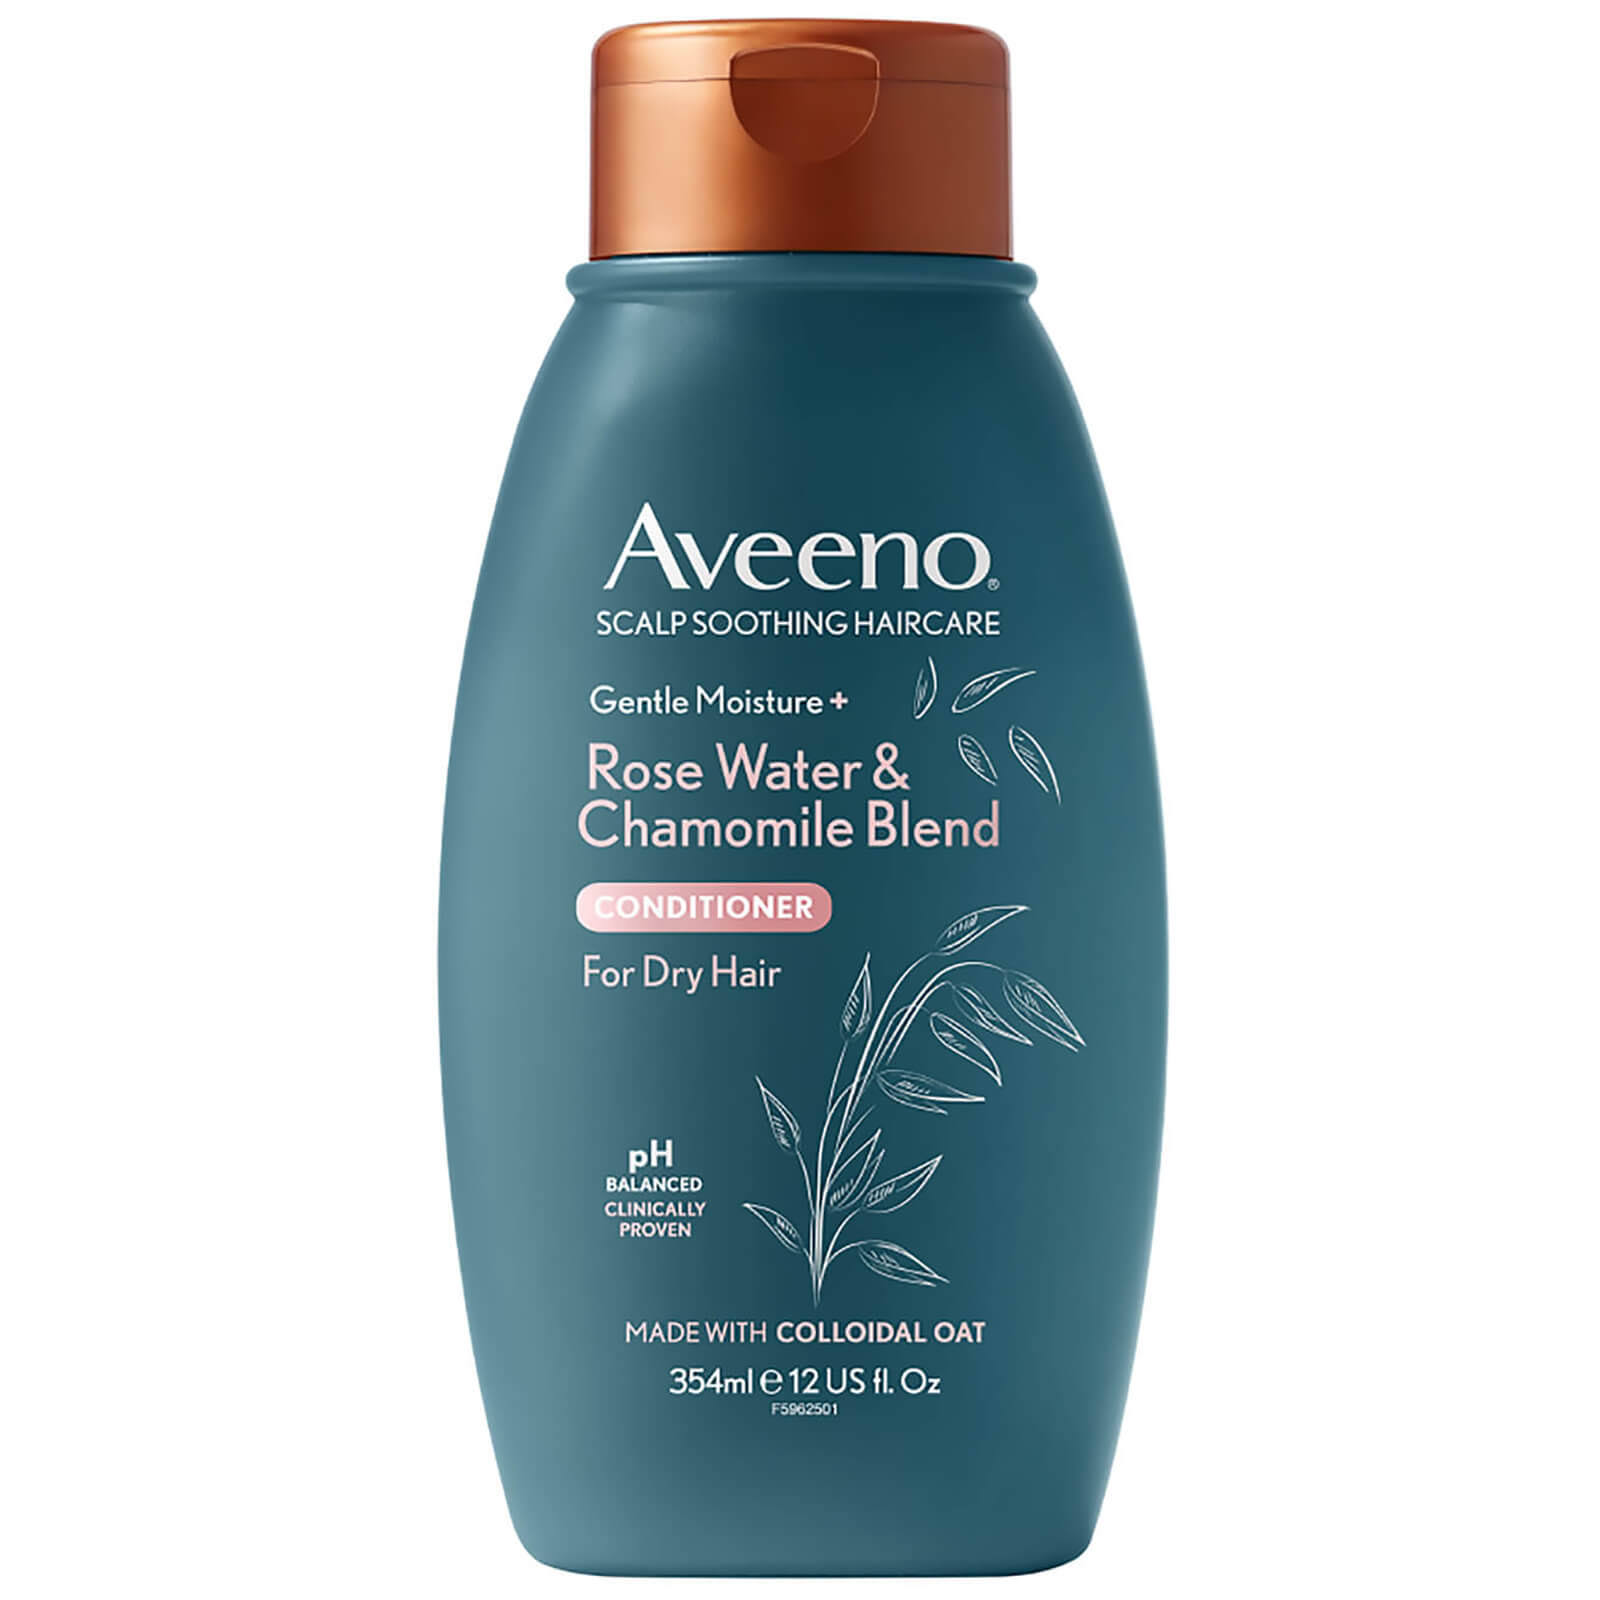 Aveeno Gentle Moisture+ Rose Water & Chamomile Blend Conditioner 354ml